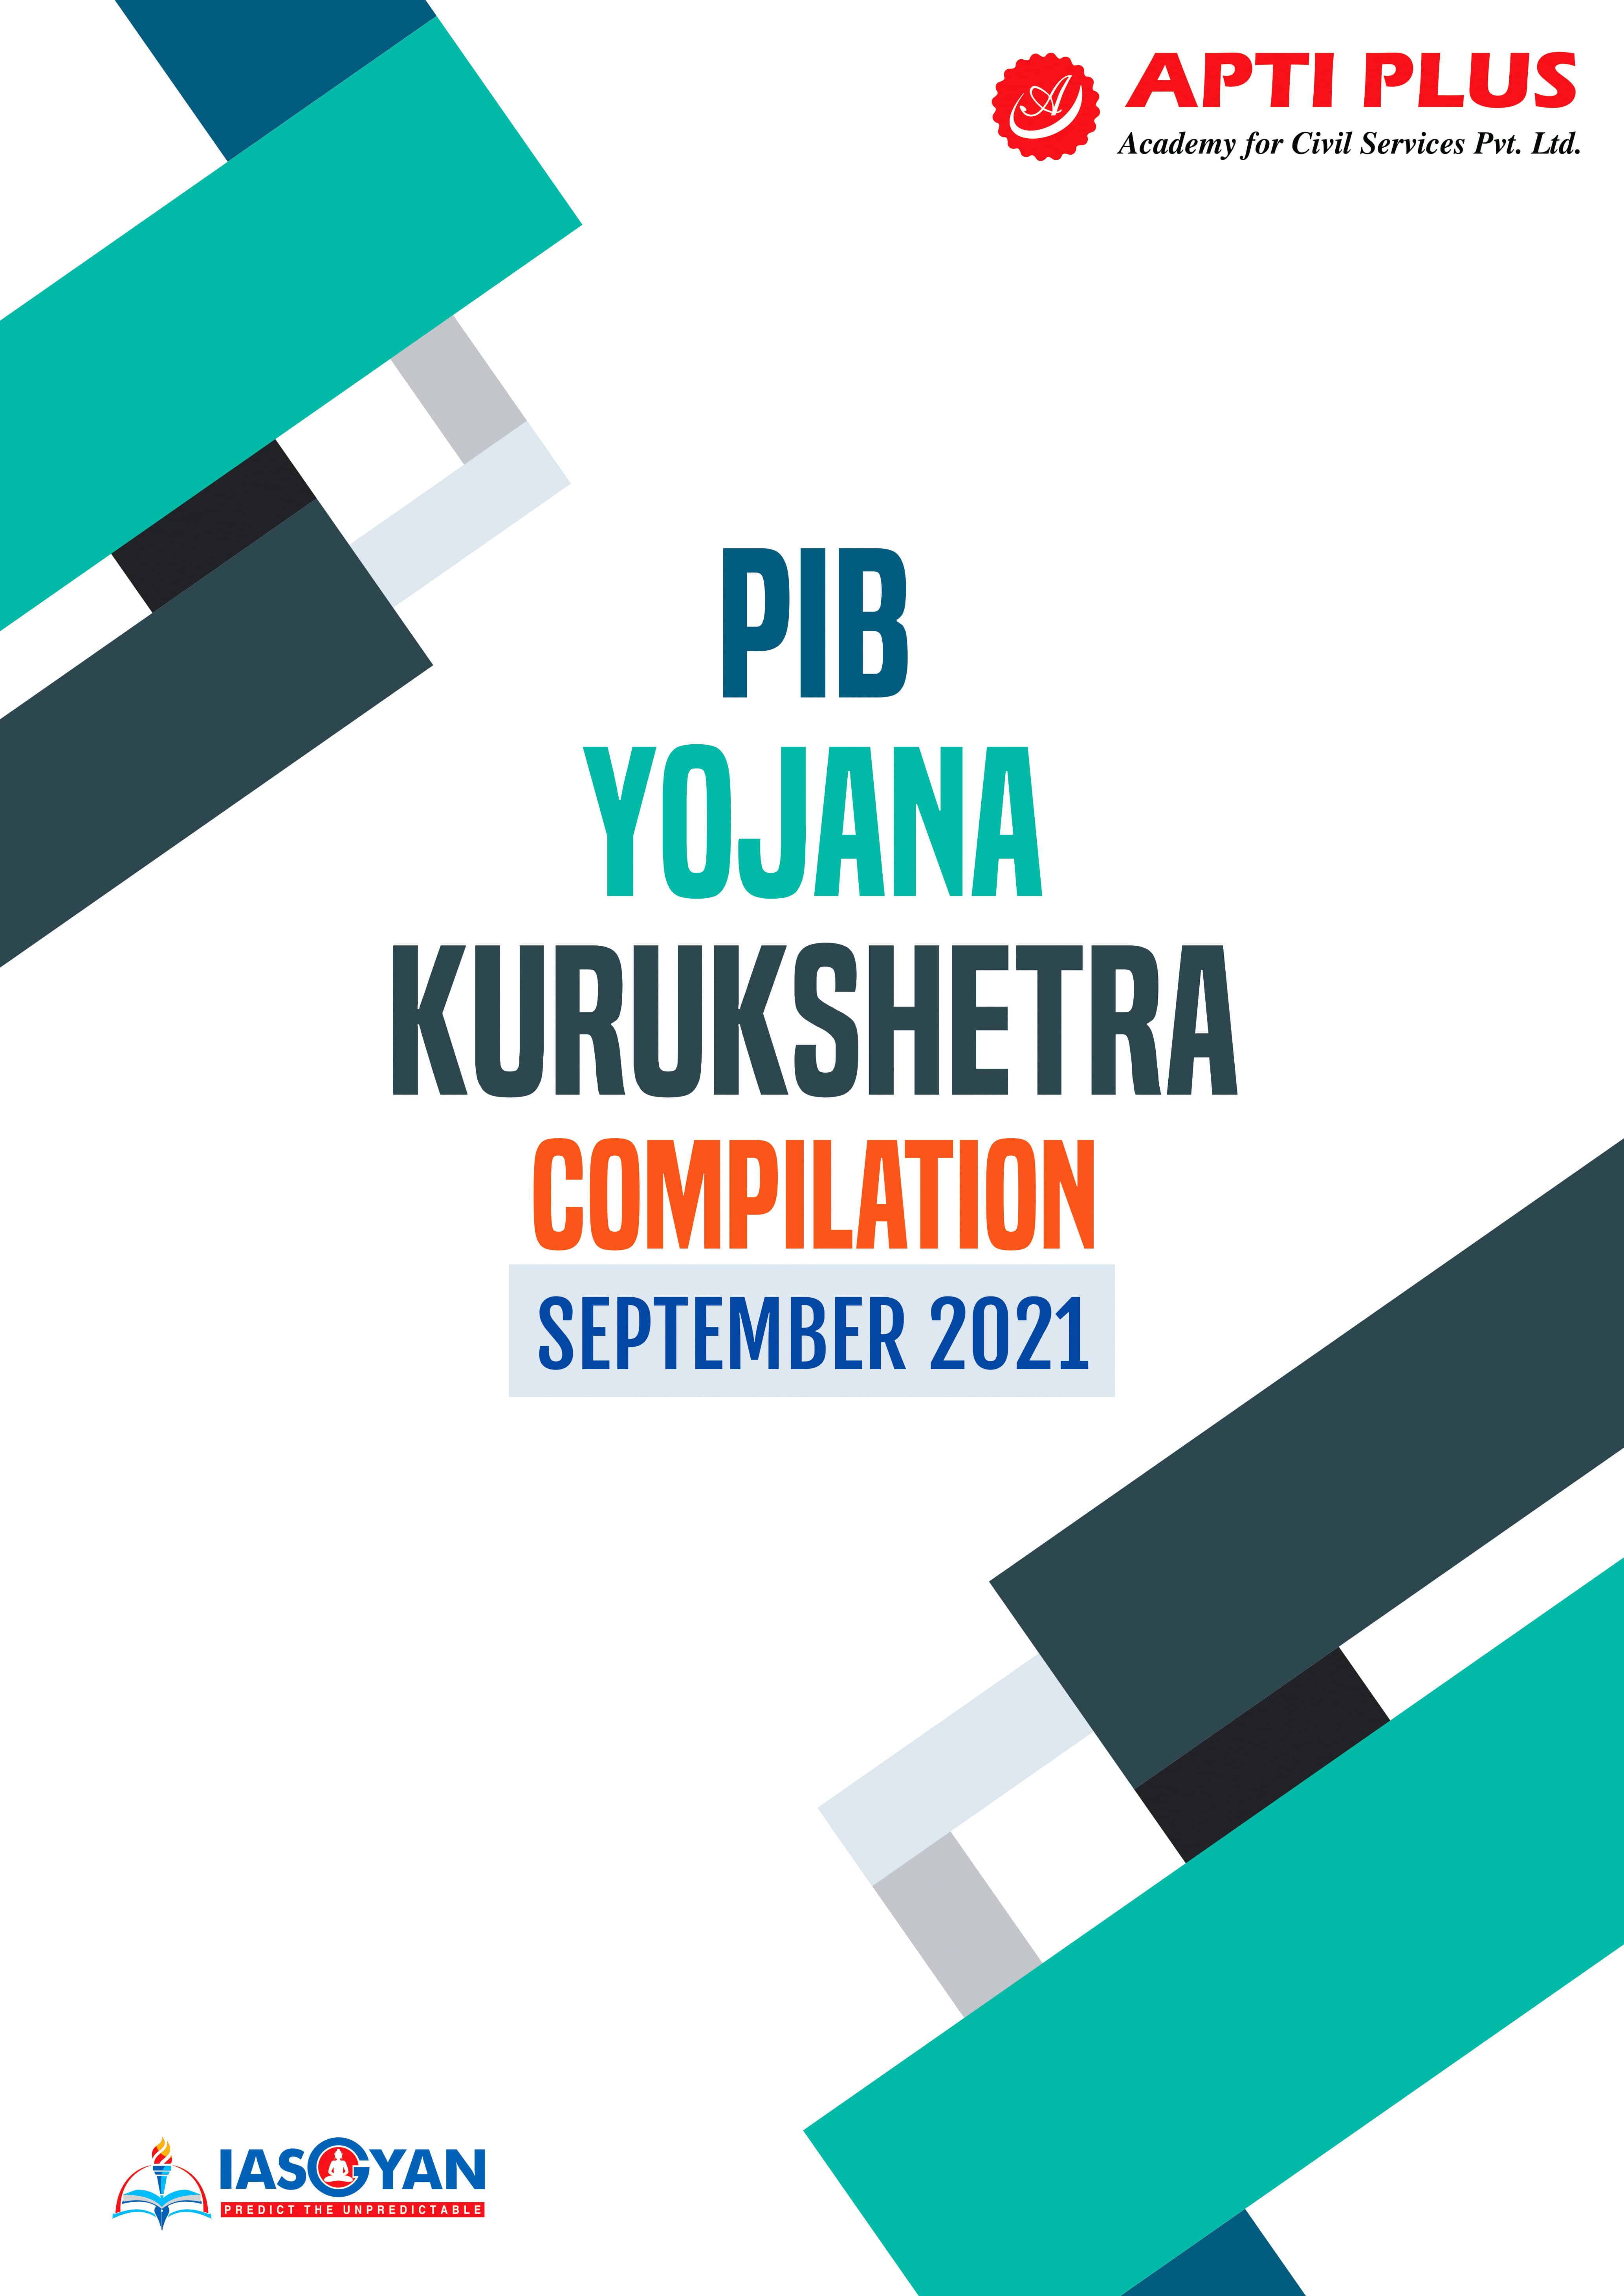 PIB, YOJANA & Kurukshetra Monthly Compilation September 2021